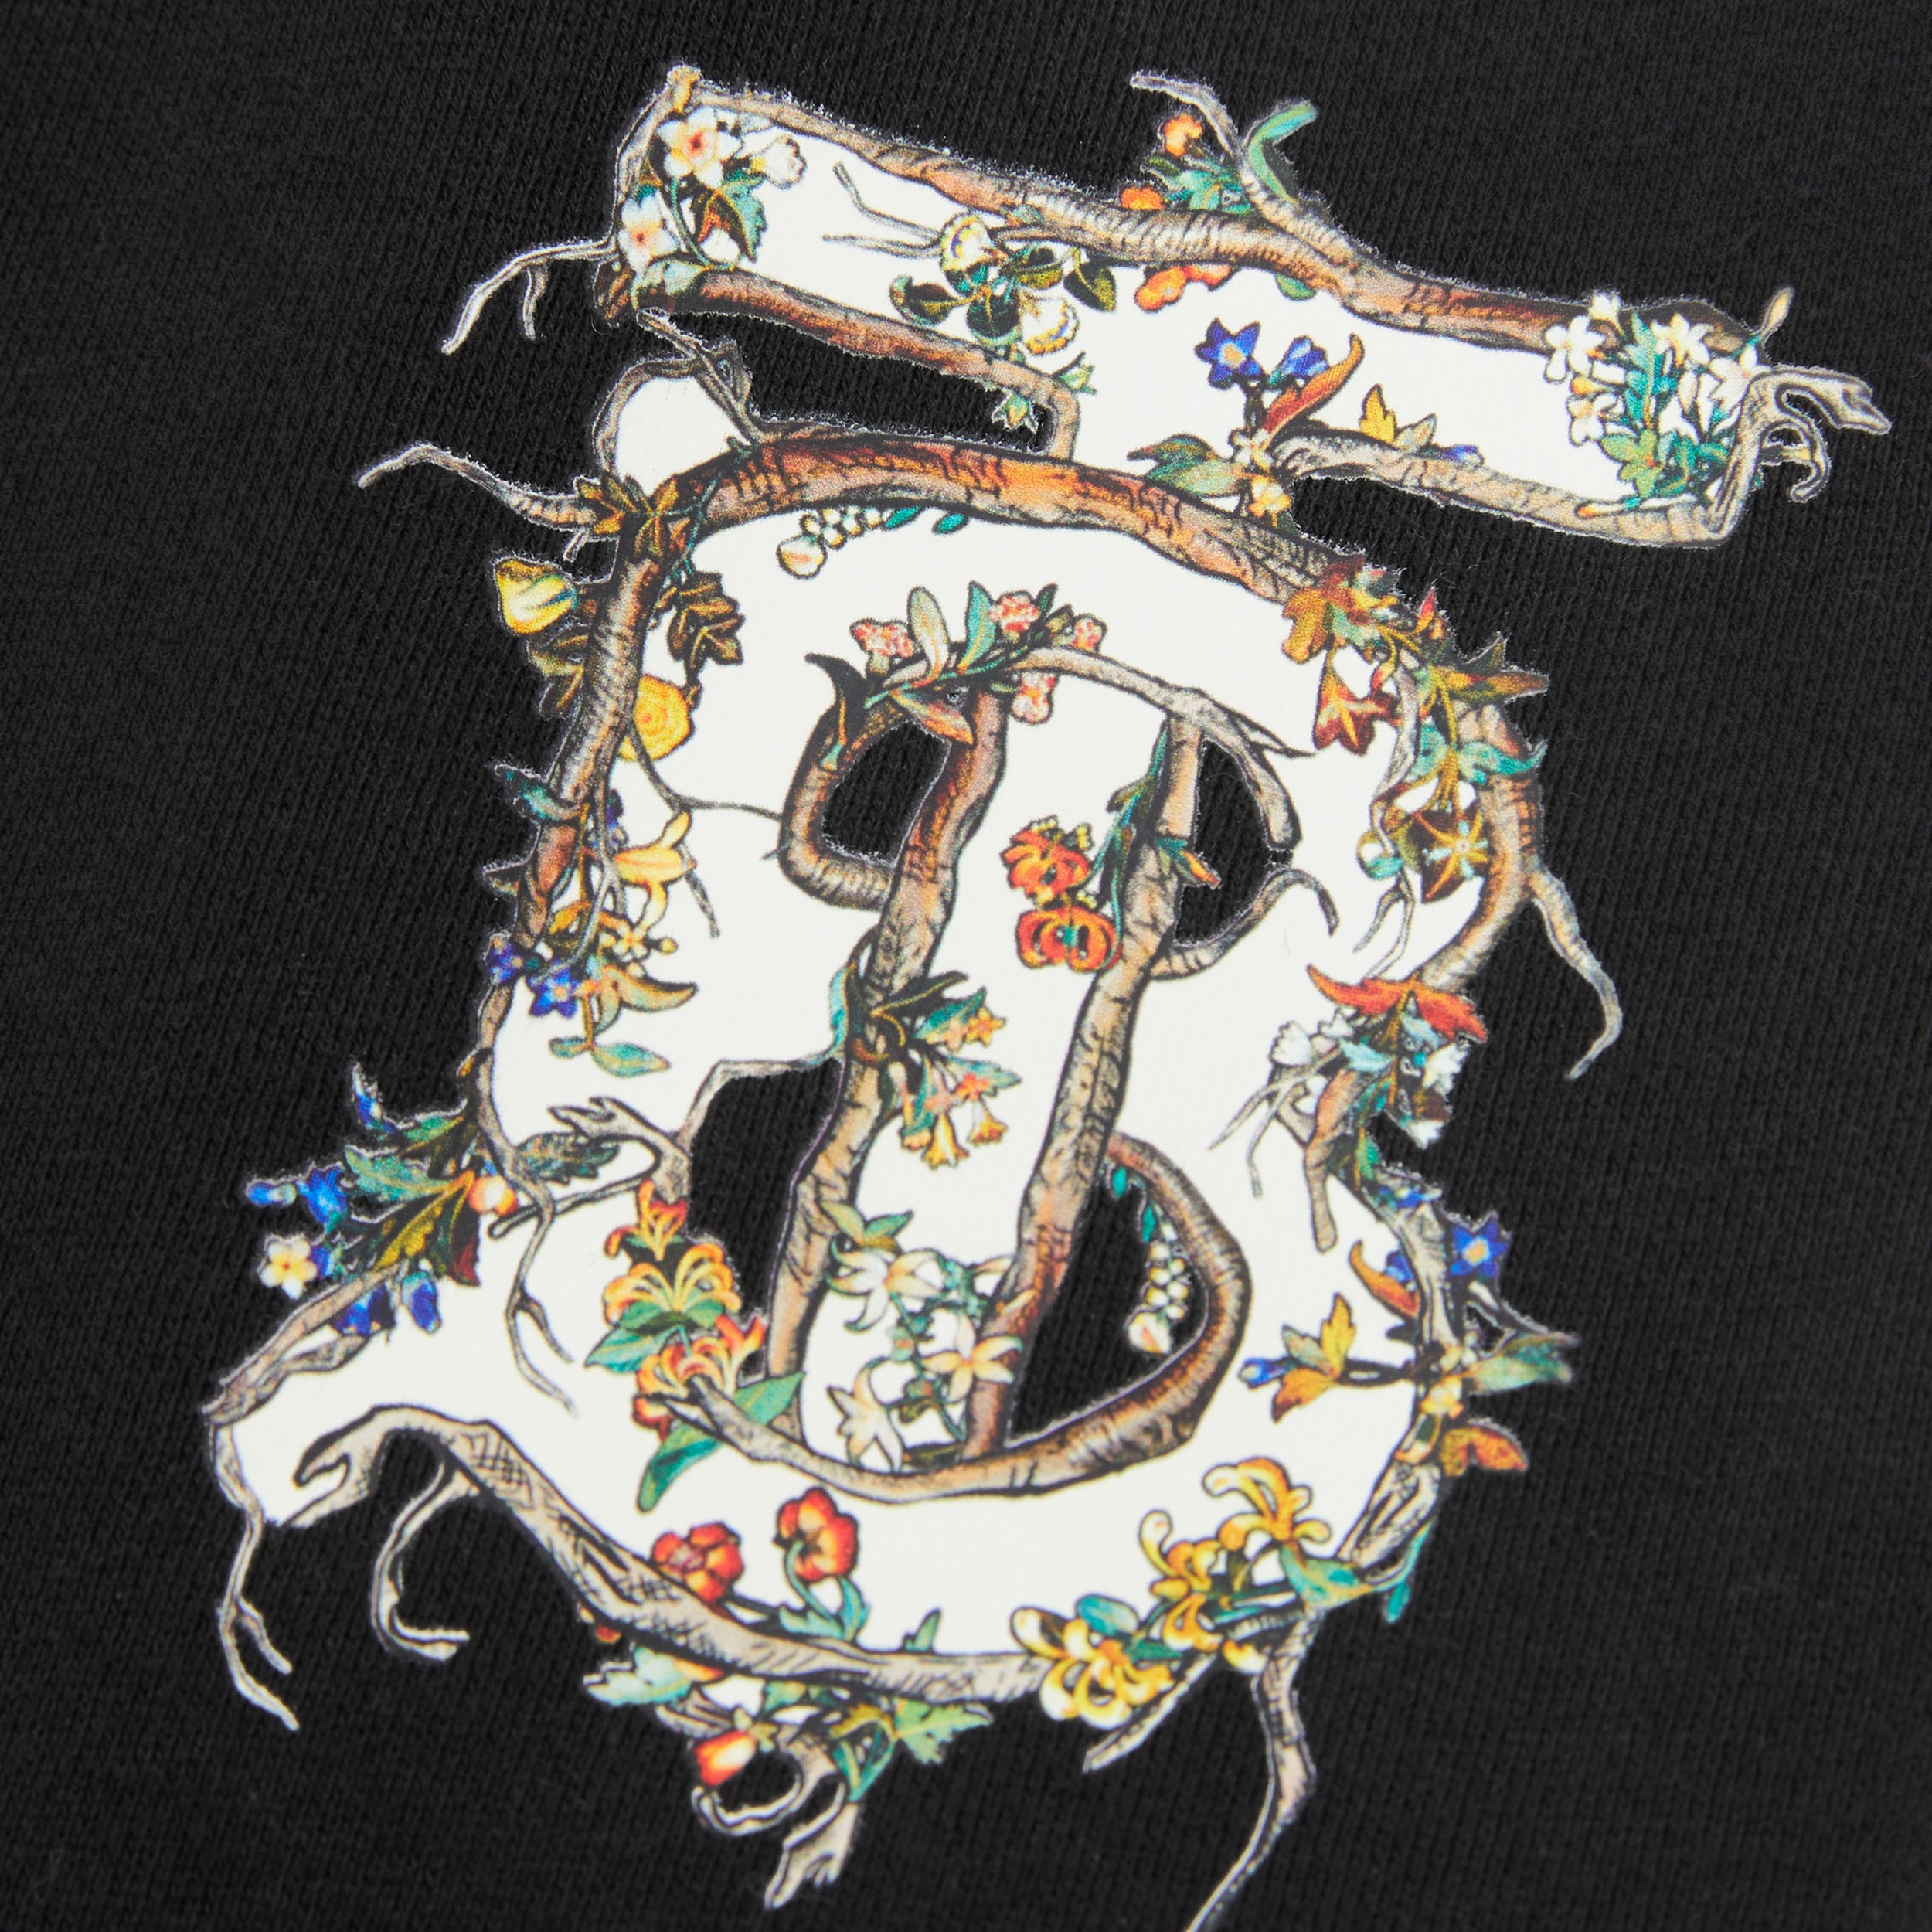 Monogram Motif Cotton Jogging Pants in Black | Burberry® Official - 2